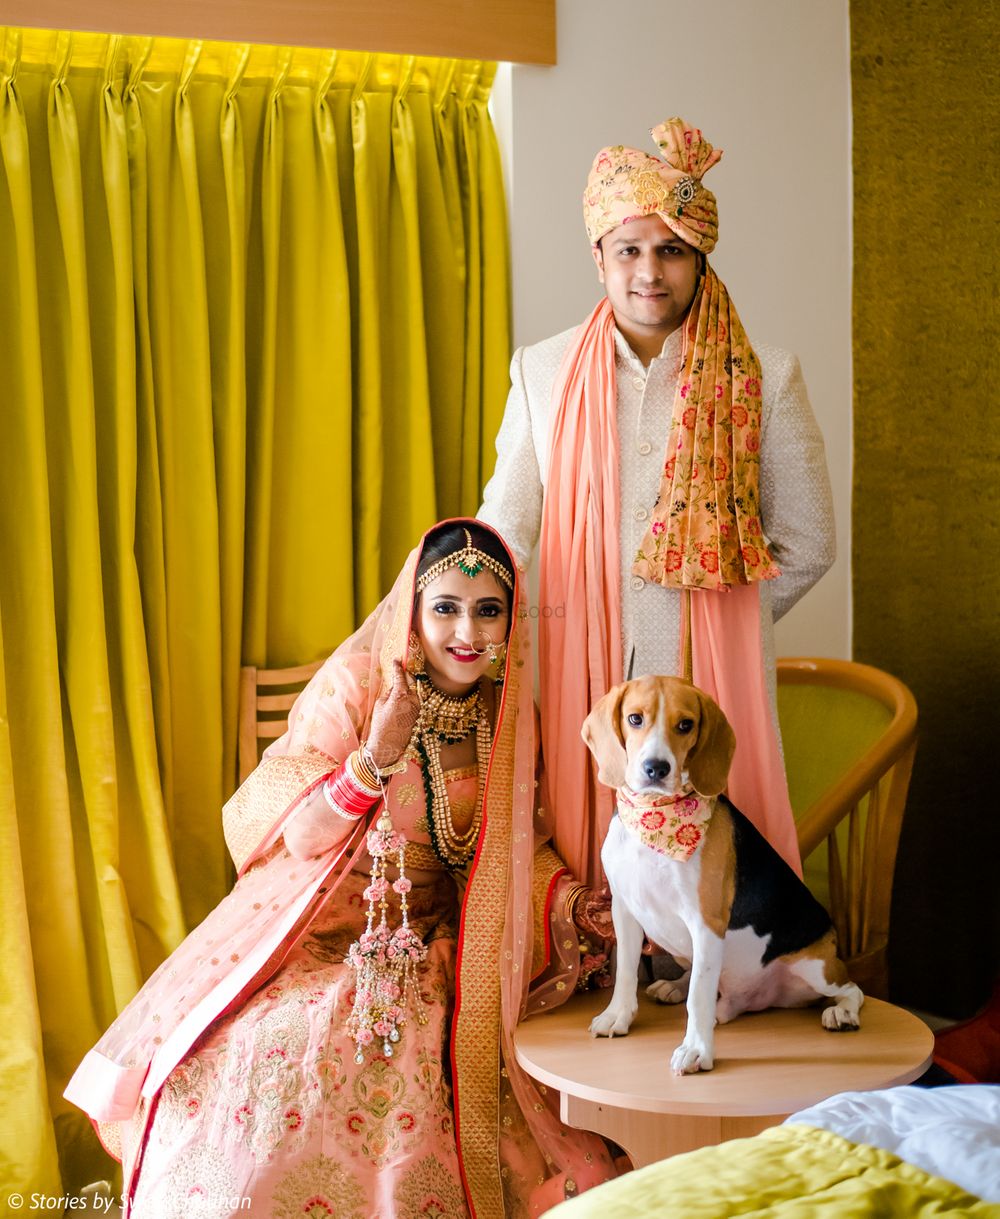 Photo From Ankit & Shikha Wedding - By Stories by Swati Chauhan